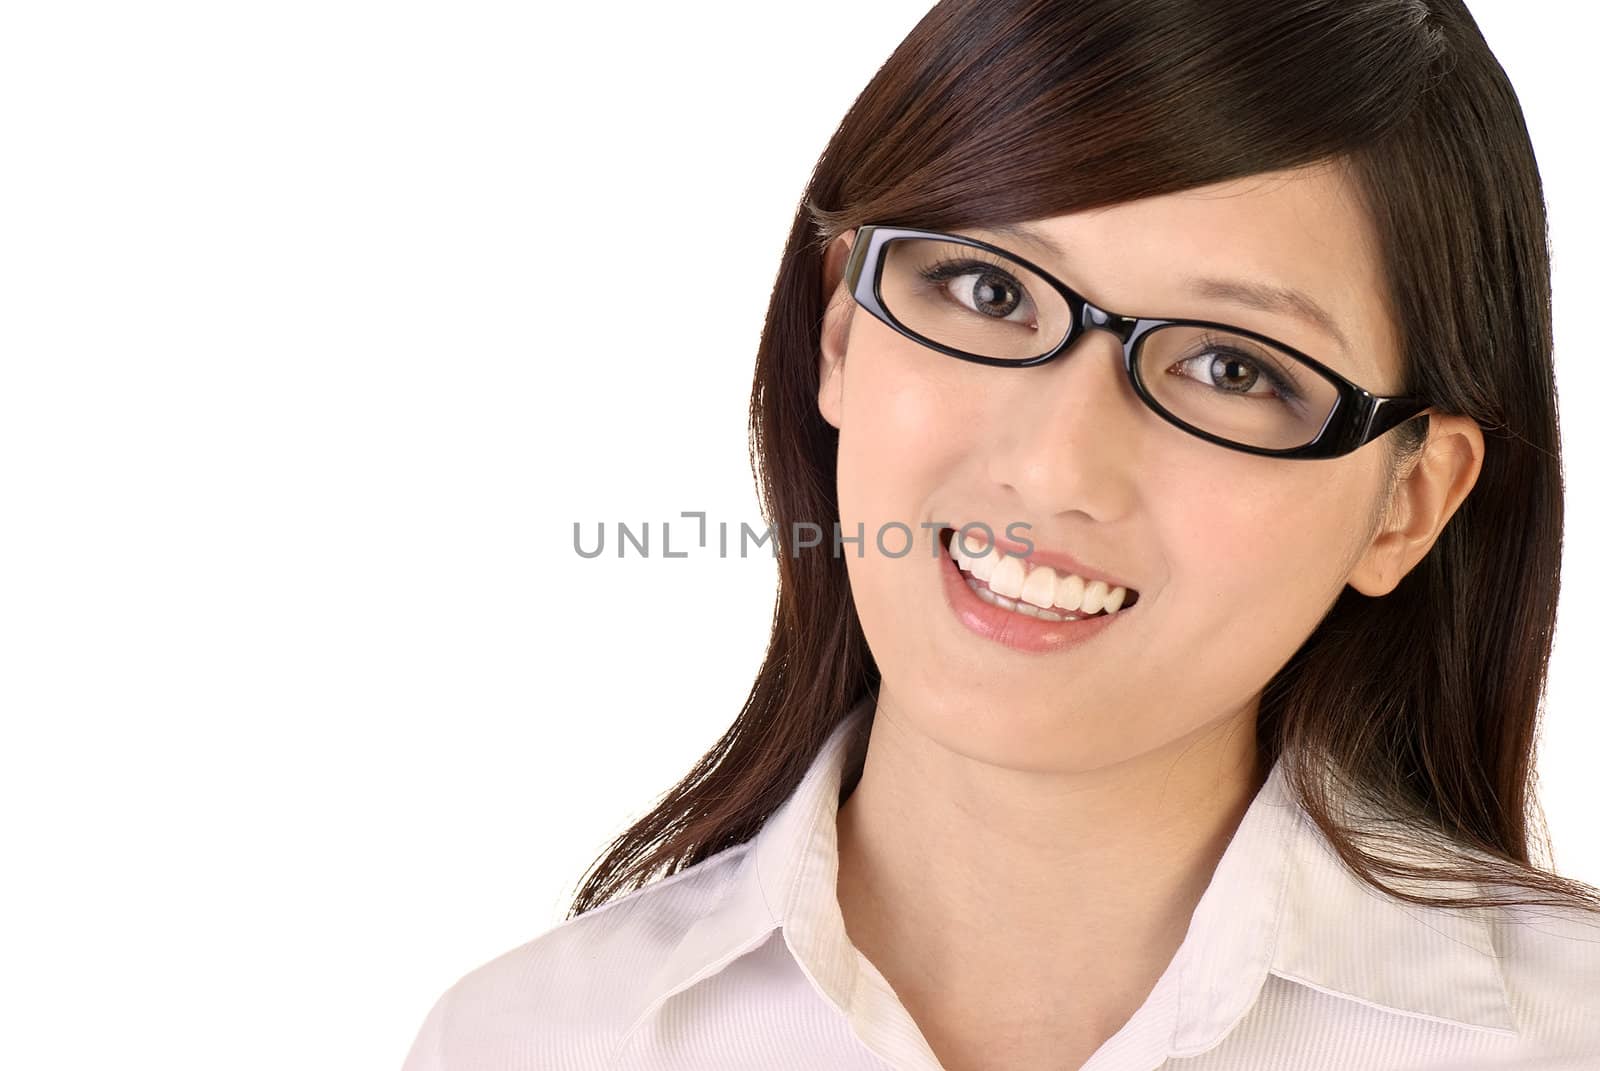 Smiling Asian businesswoman portrait closeup image on white background.